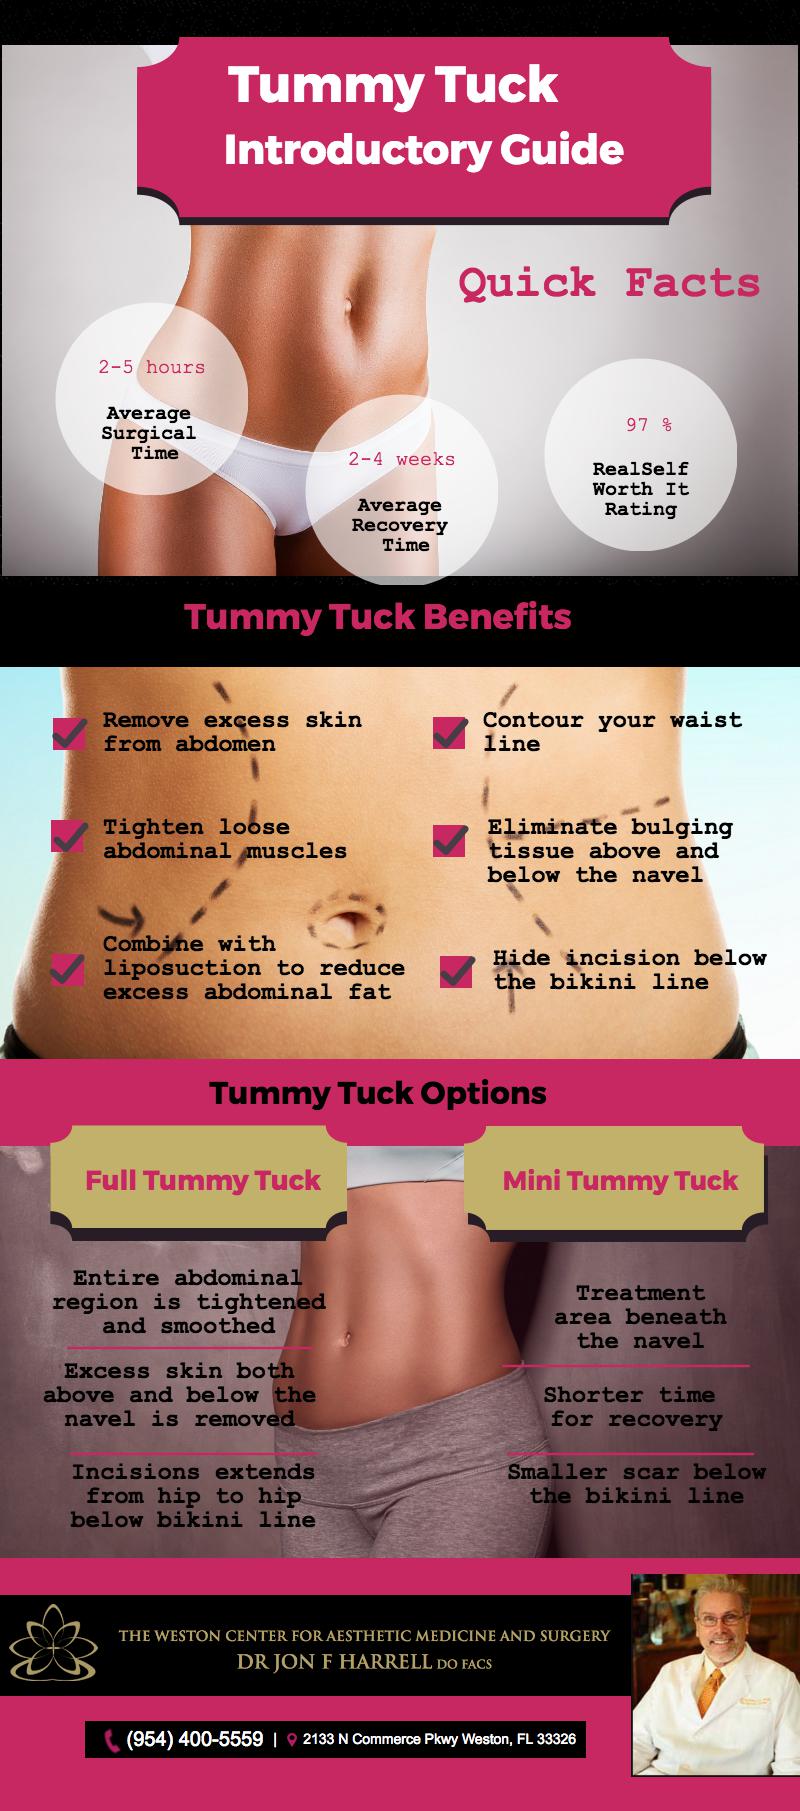 Tummy Tuck Miami Surgery, What are the risks?